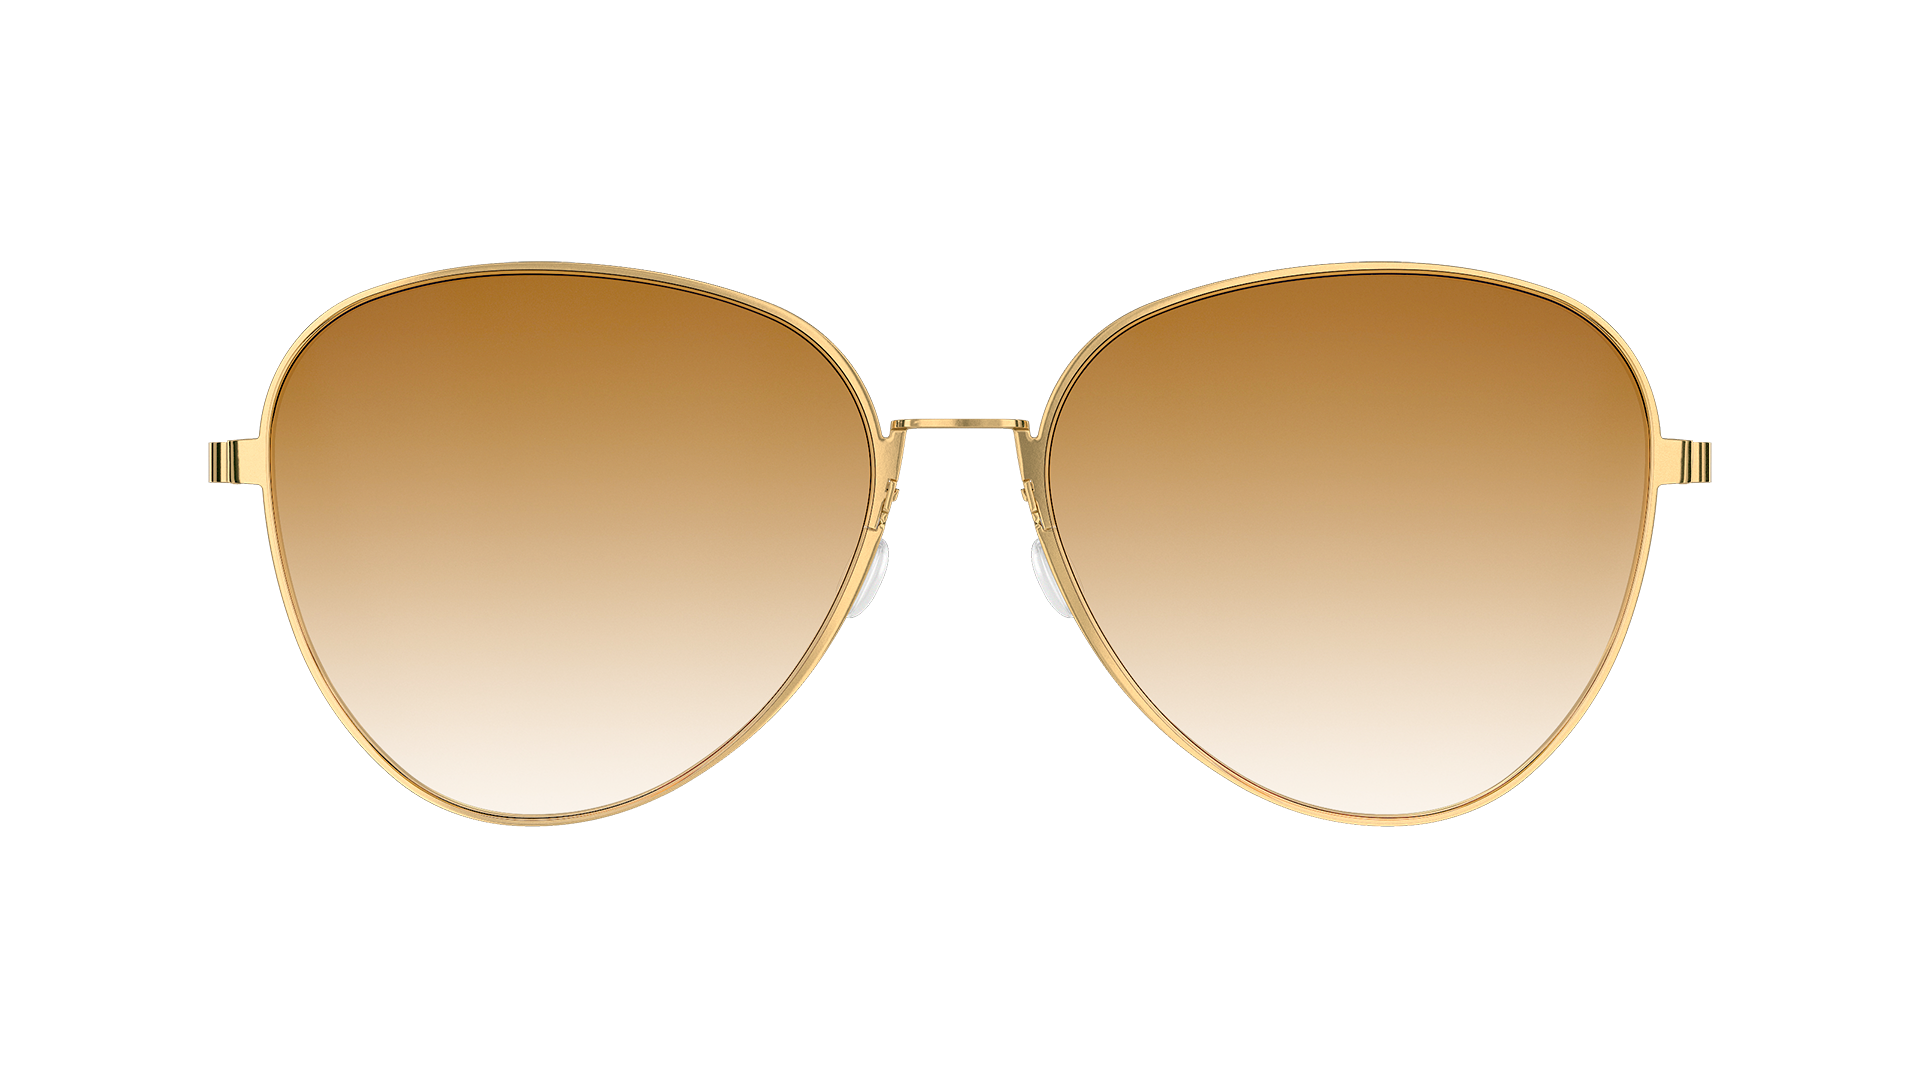 LINDBERG Model 8908 GT gold sunglasses in an aviator shape